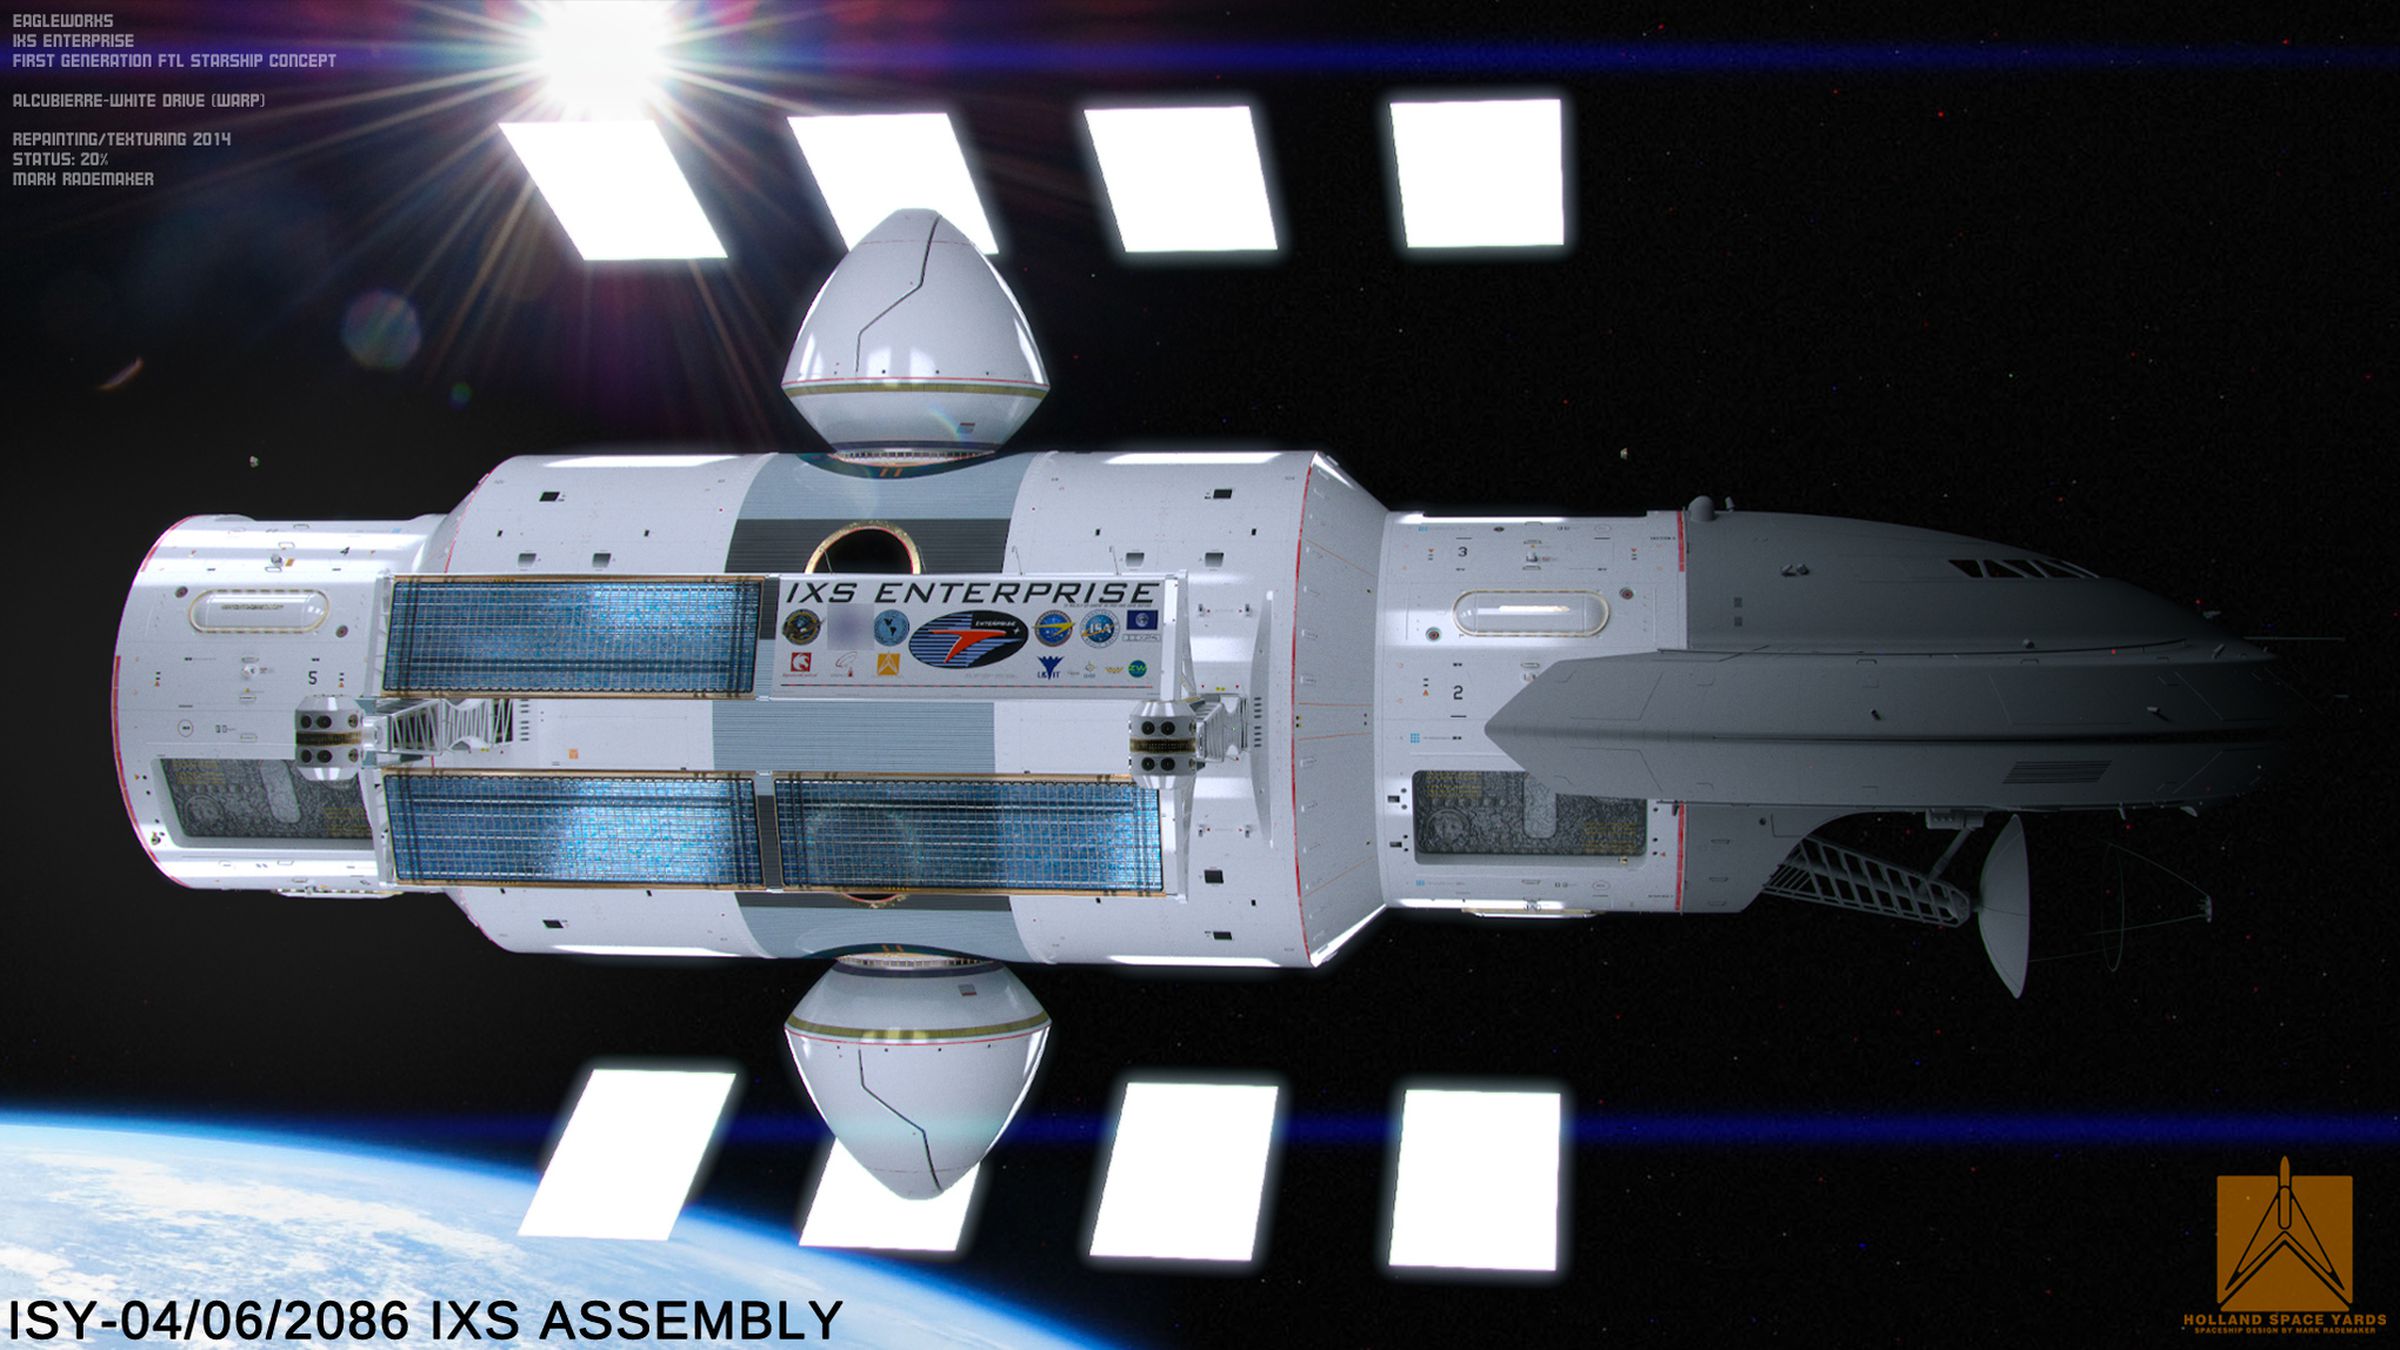 IXS Enterprise NASA images